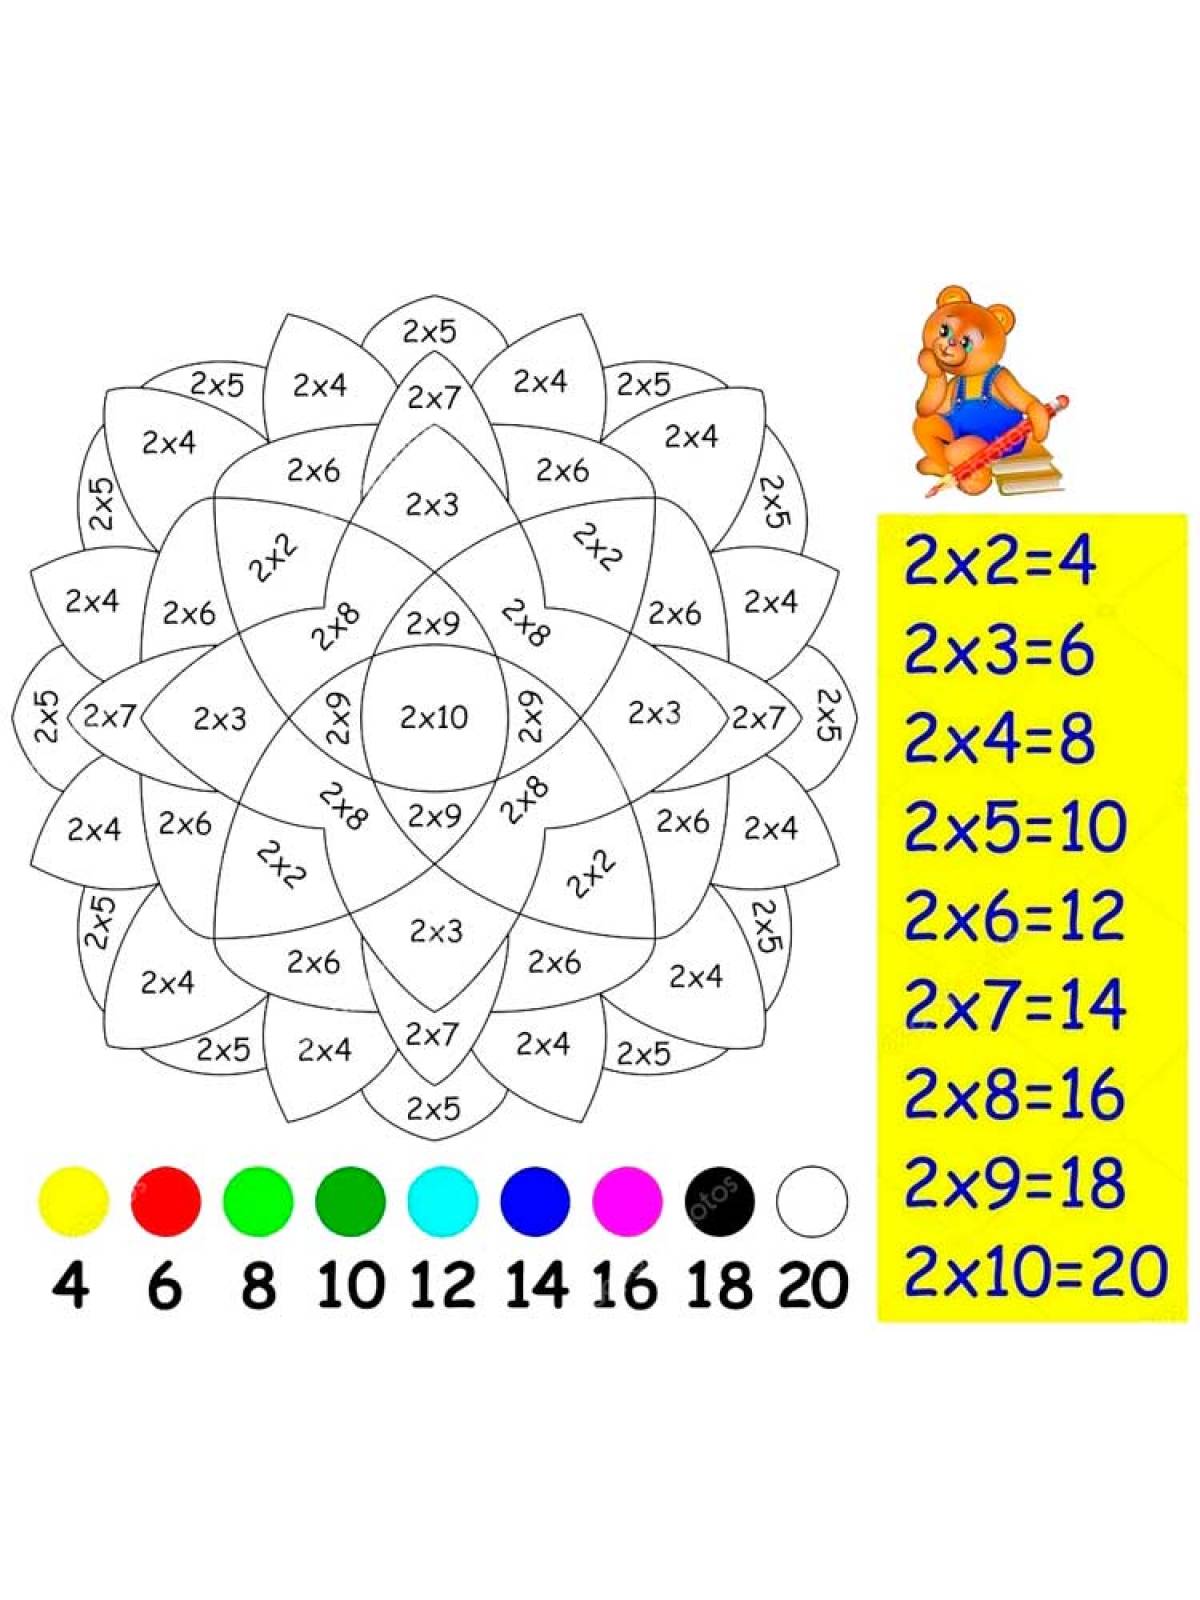 Multiplication table 6